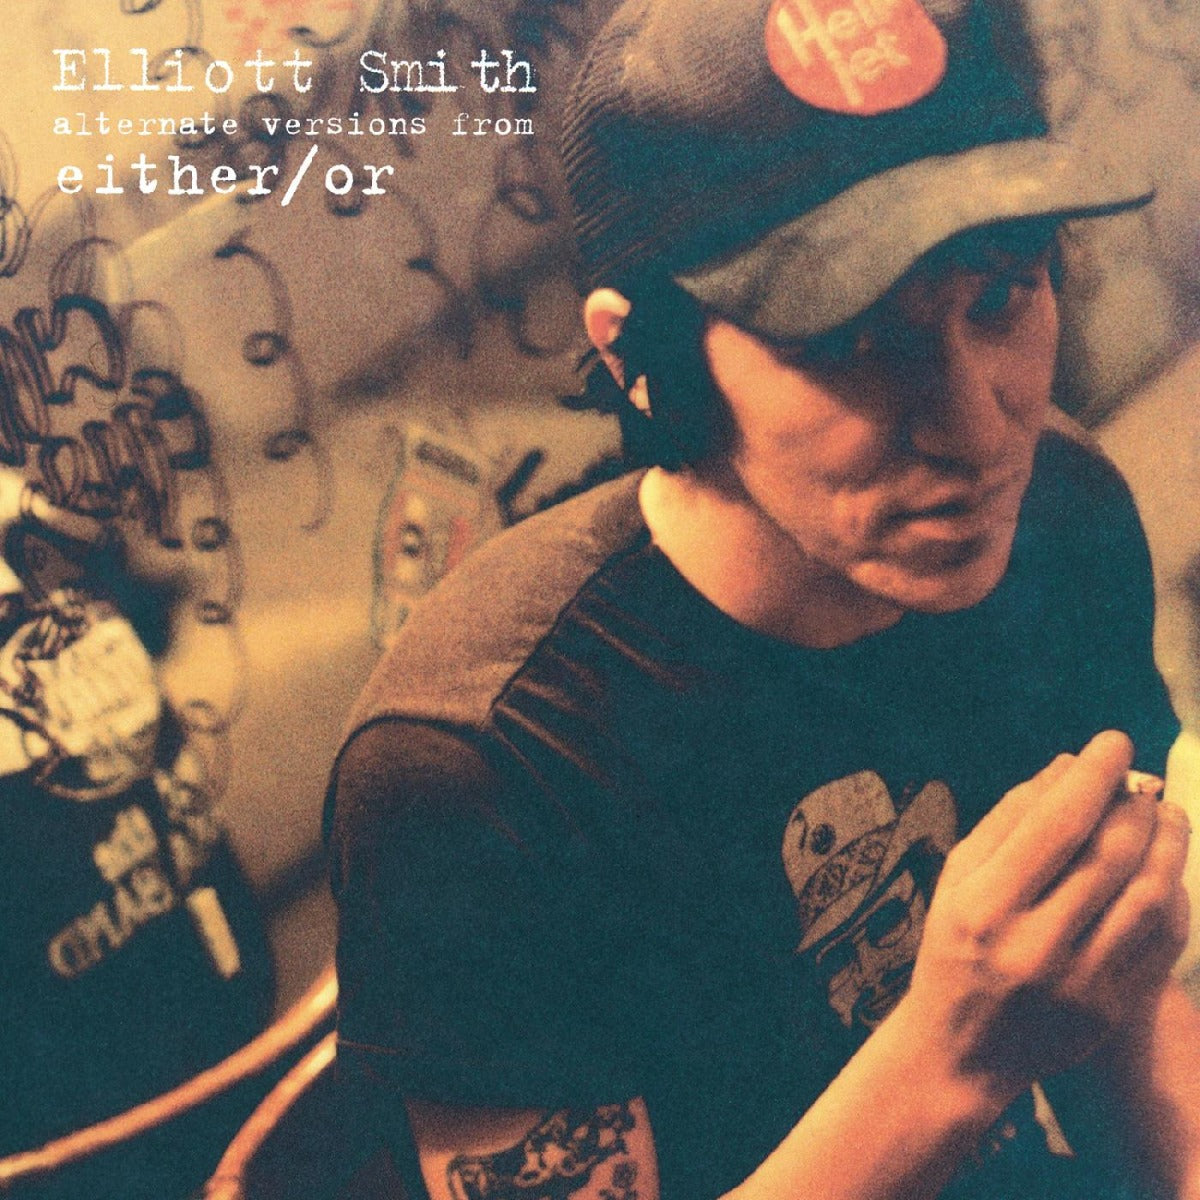 Elliott Smith - Either/Or: Alternative Versions (Limited Edition, White Vinyl) (7" Single) [Vinyl]